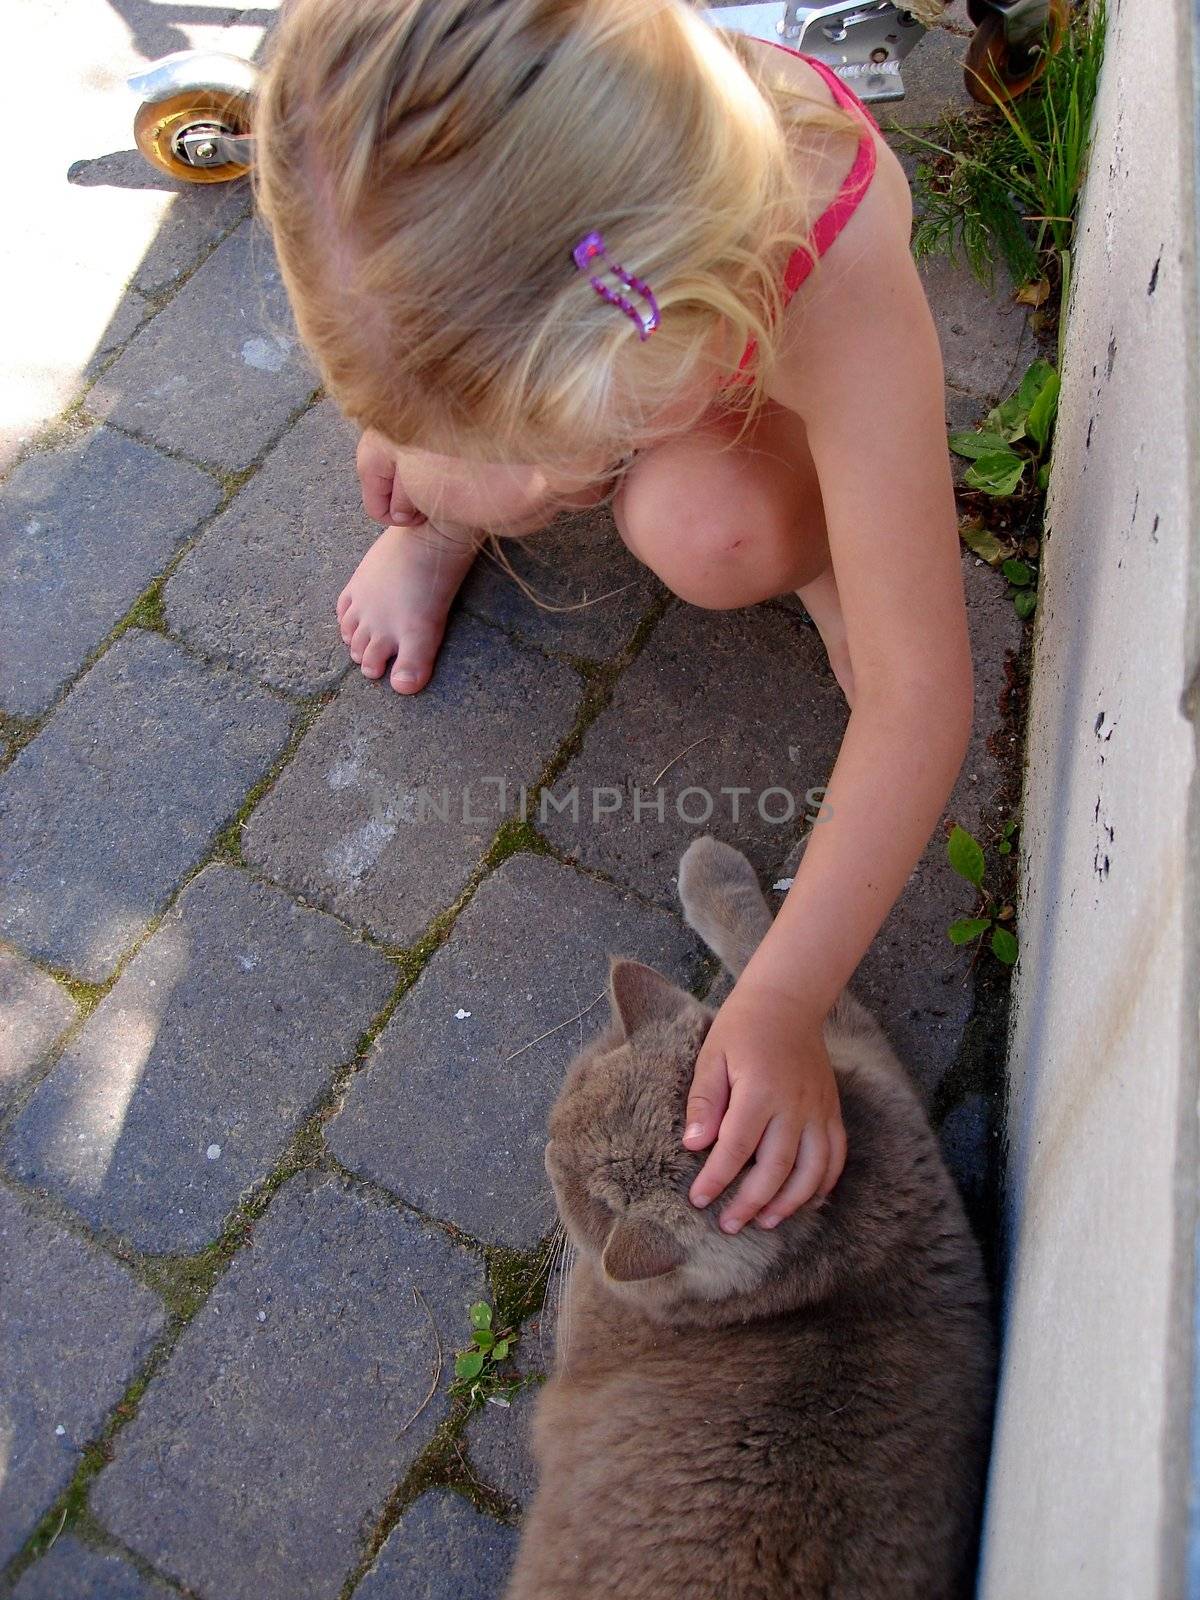 Scandinavian Lifestyle - girl and cat by Bildehagen